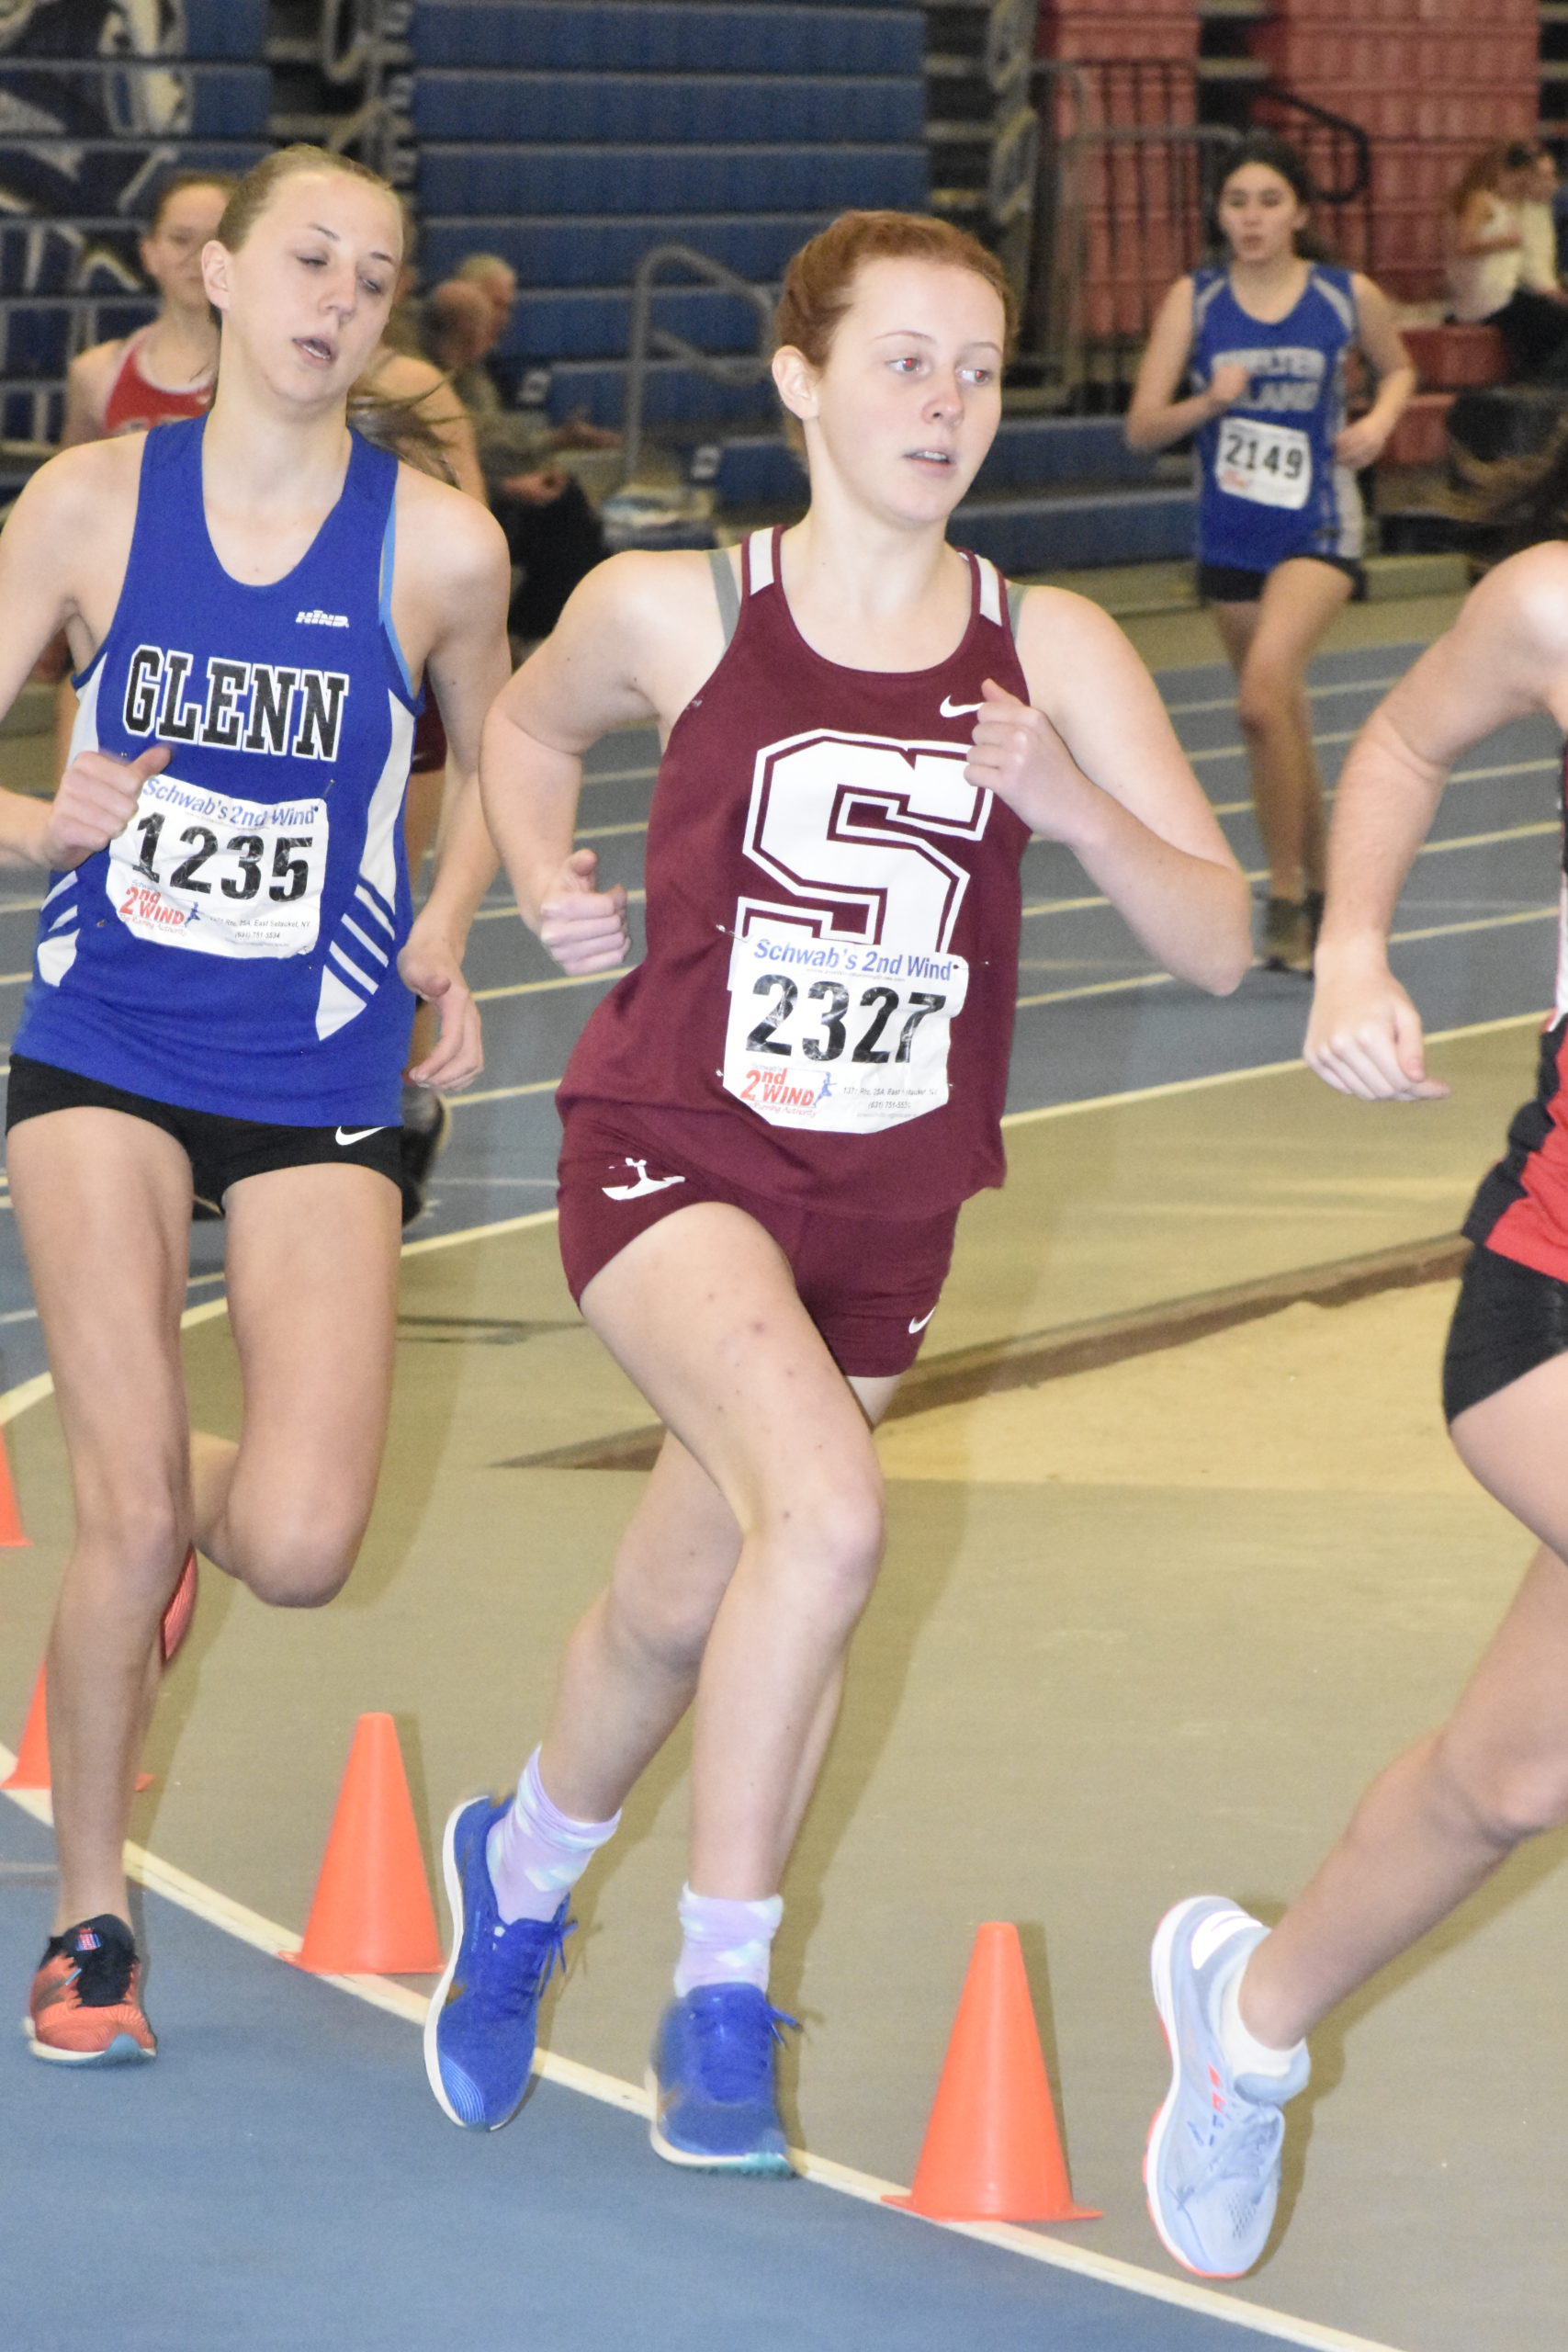 Southampton freshman Allison Rishel in the 1,500-meter race.